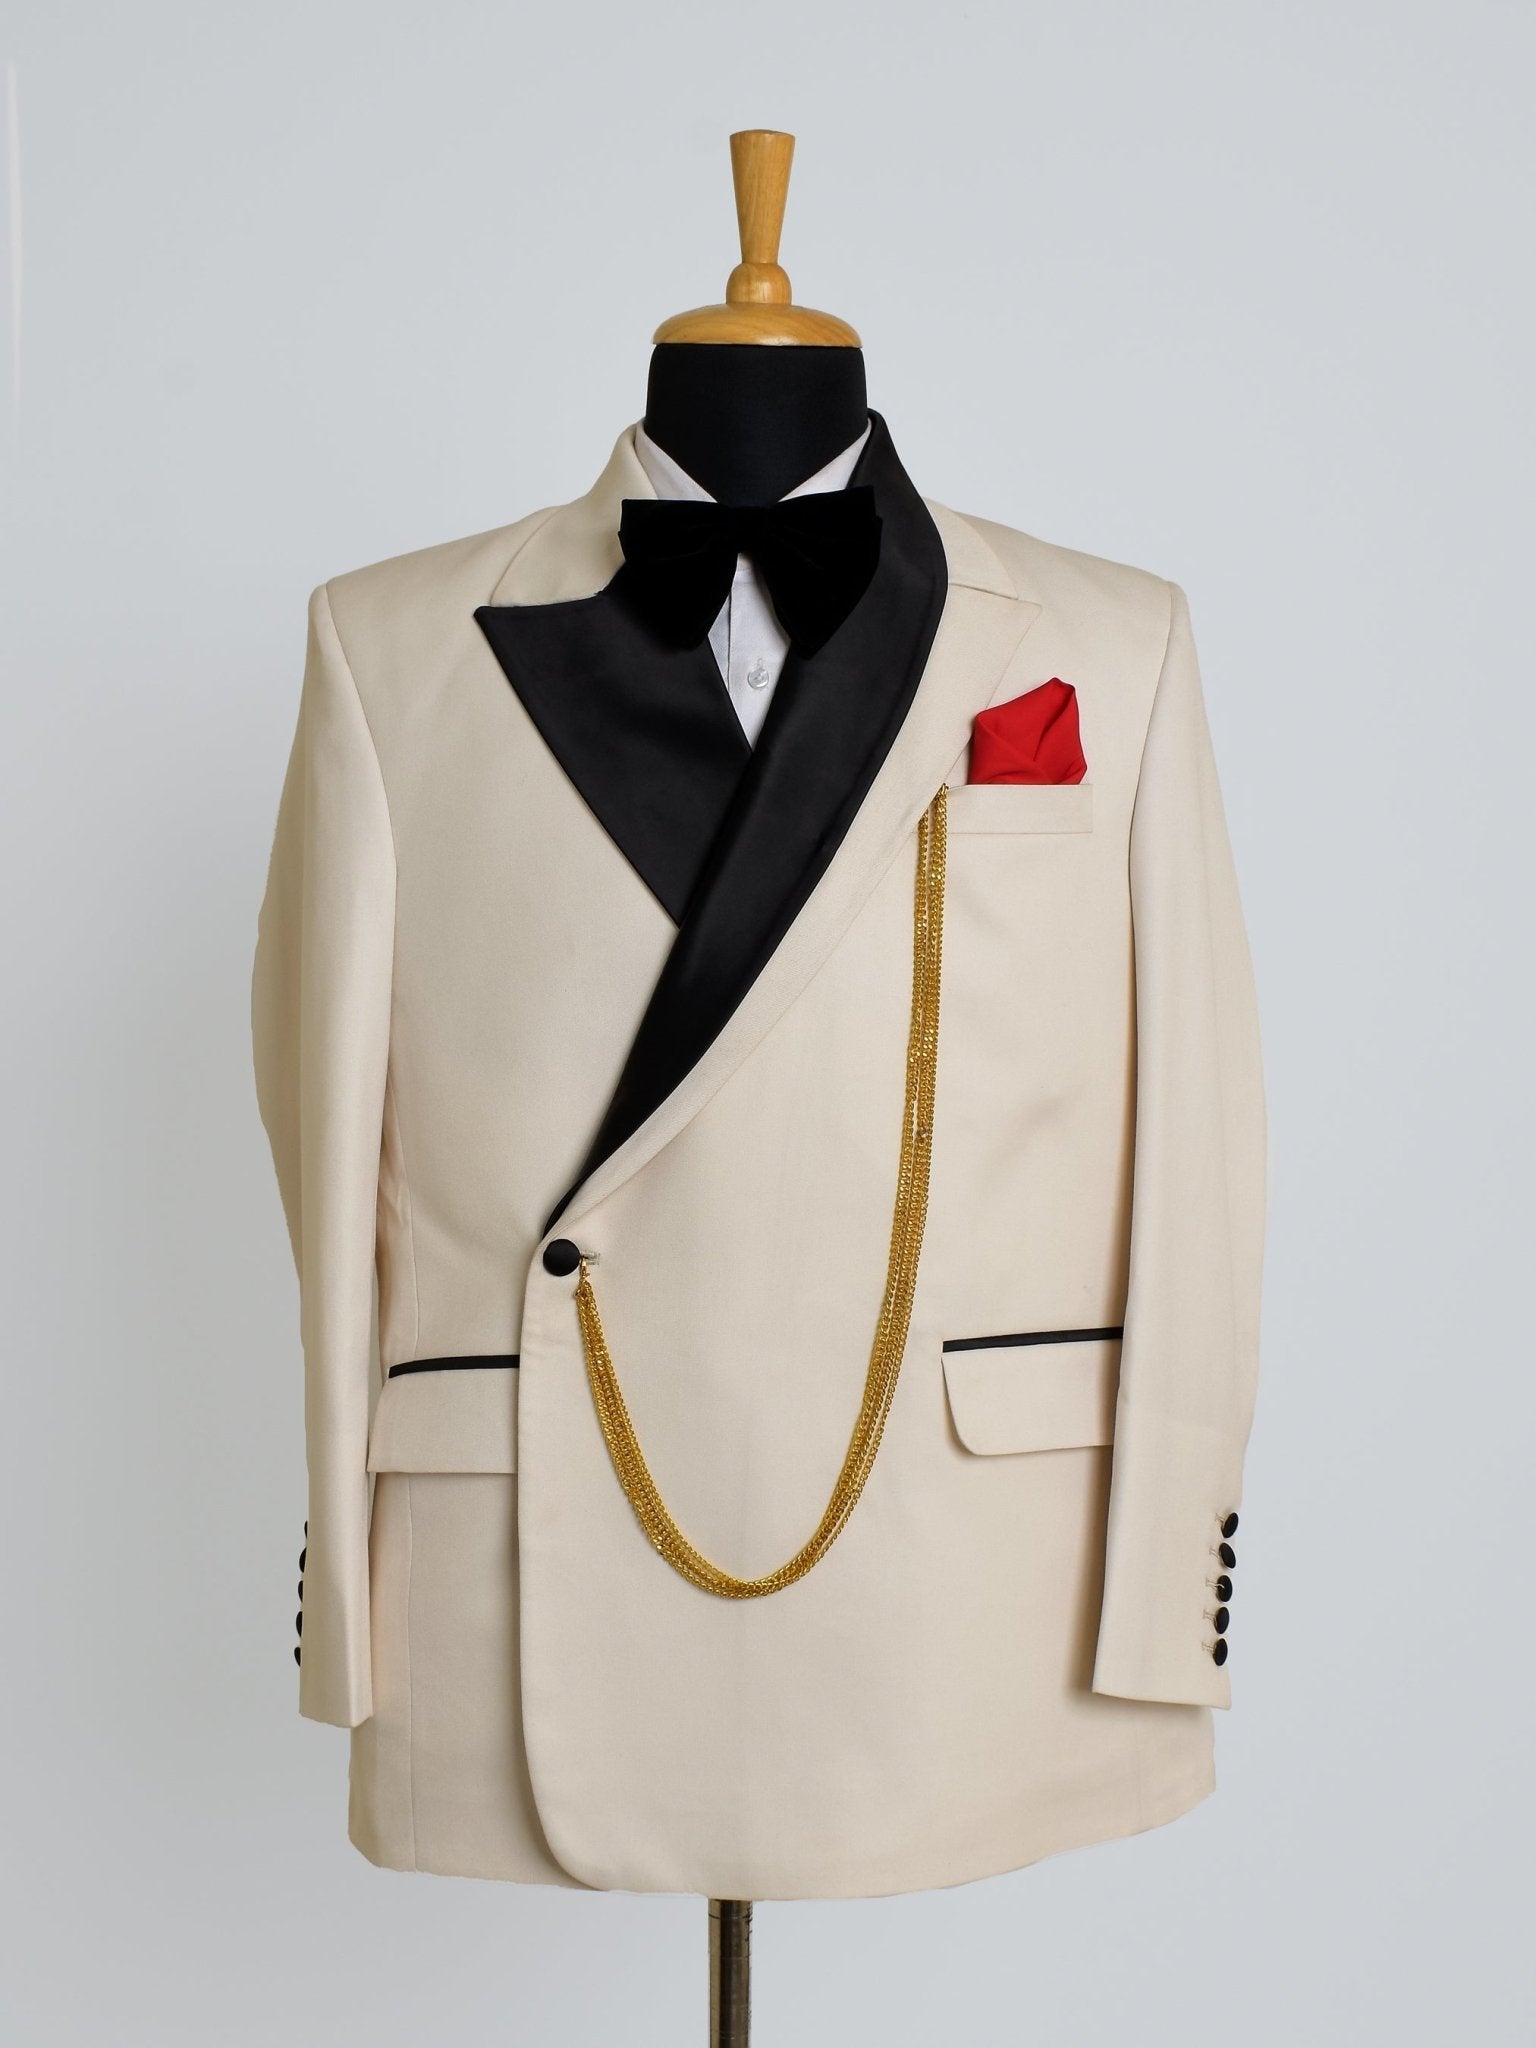 Gala Dinner DB Designer Suit - Addicted Bespoken